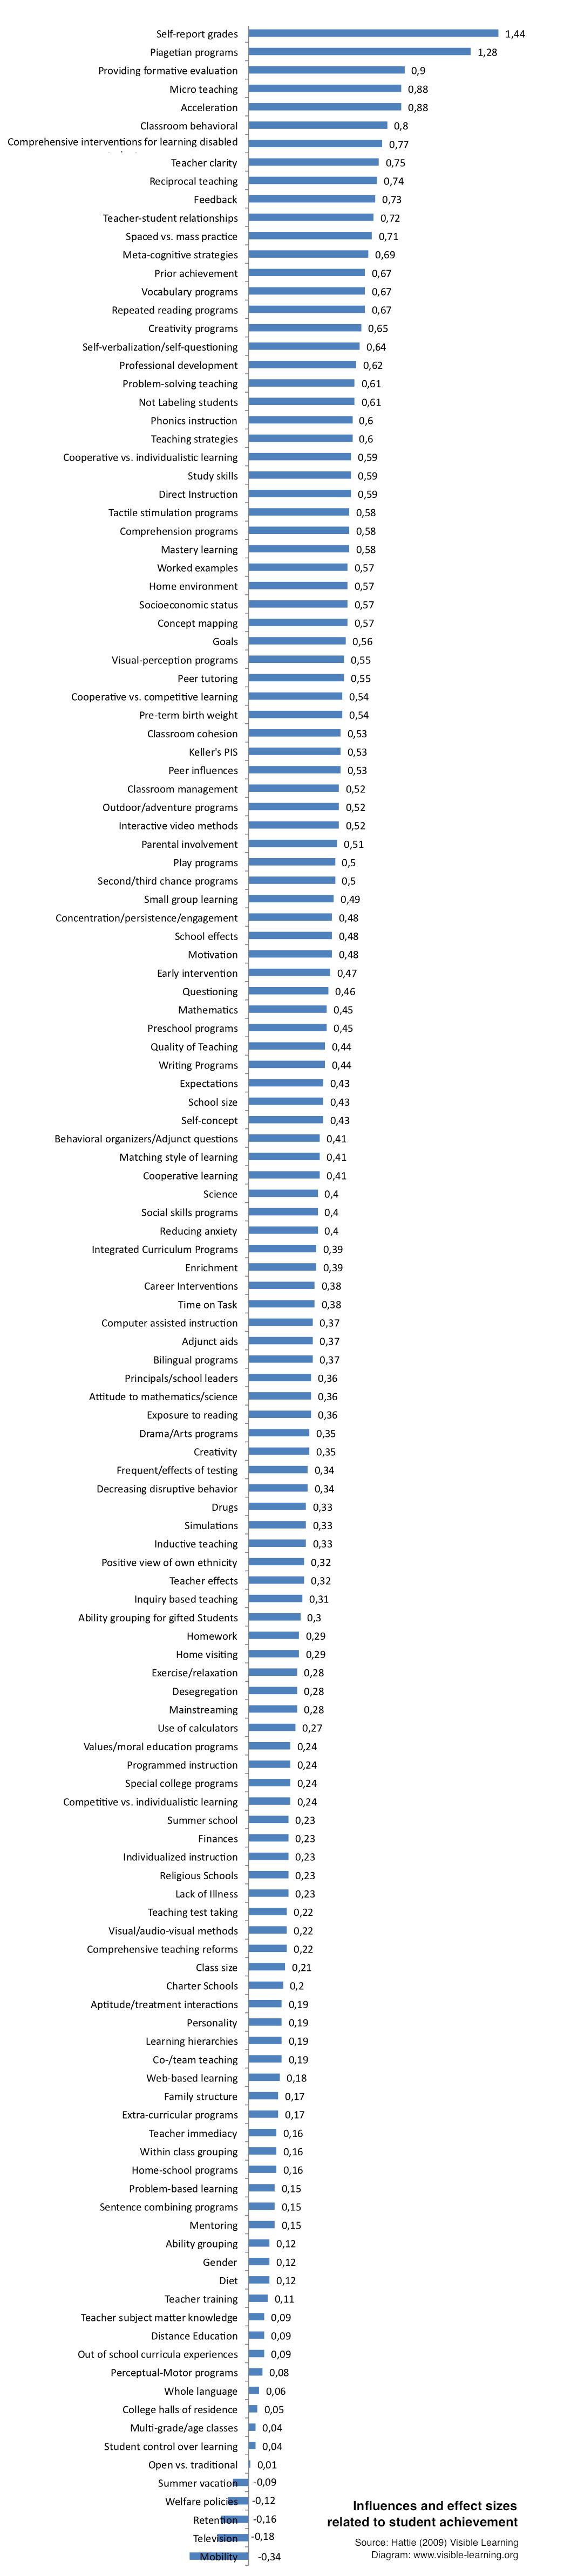 Hattie ranking: Influences and effect sizes related to student achievement (Hattie-Rangliste)